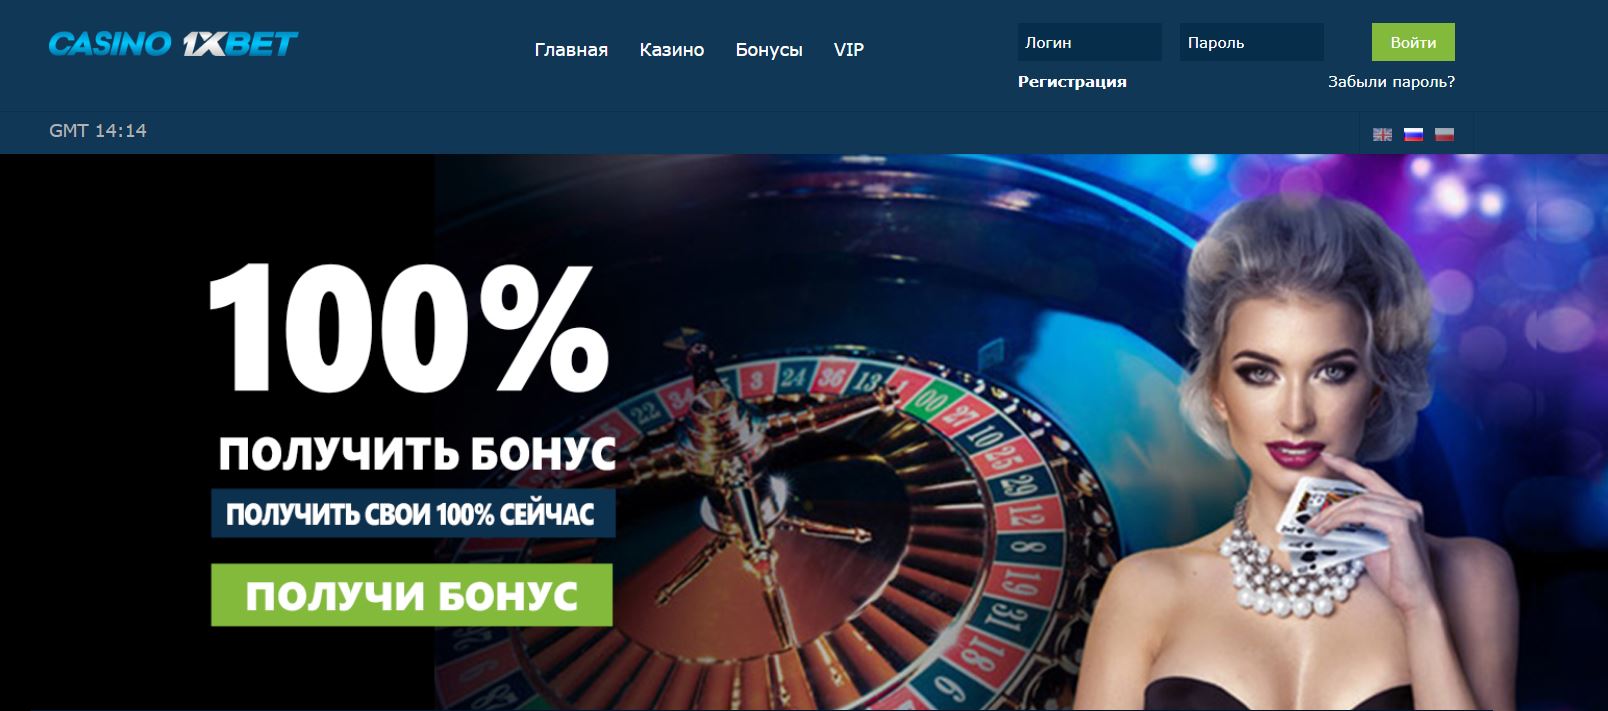 casino x отзывы россия плей x2021 ru